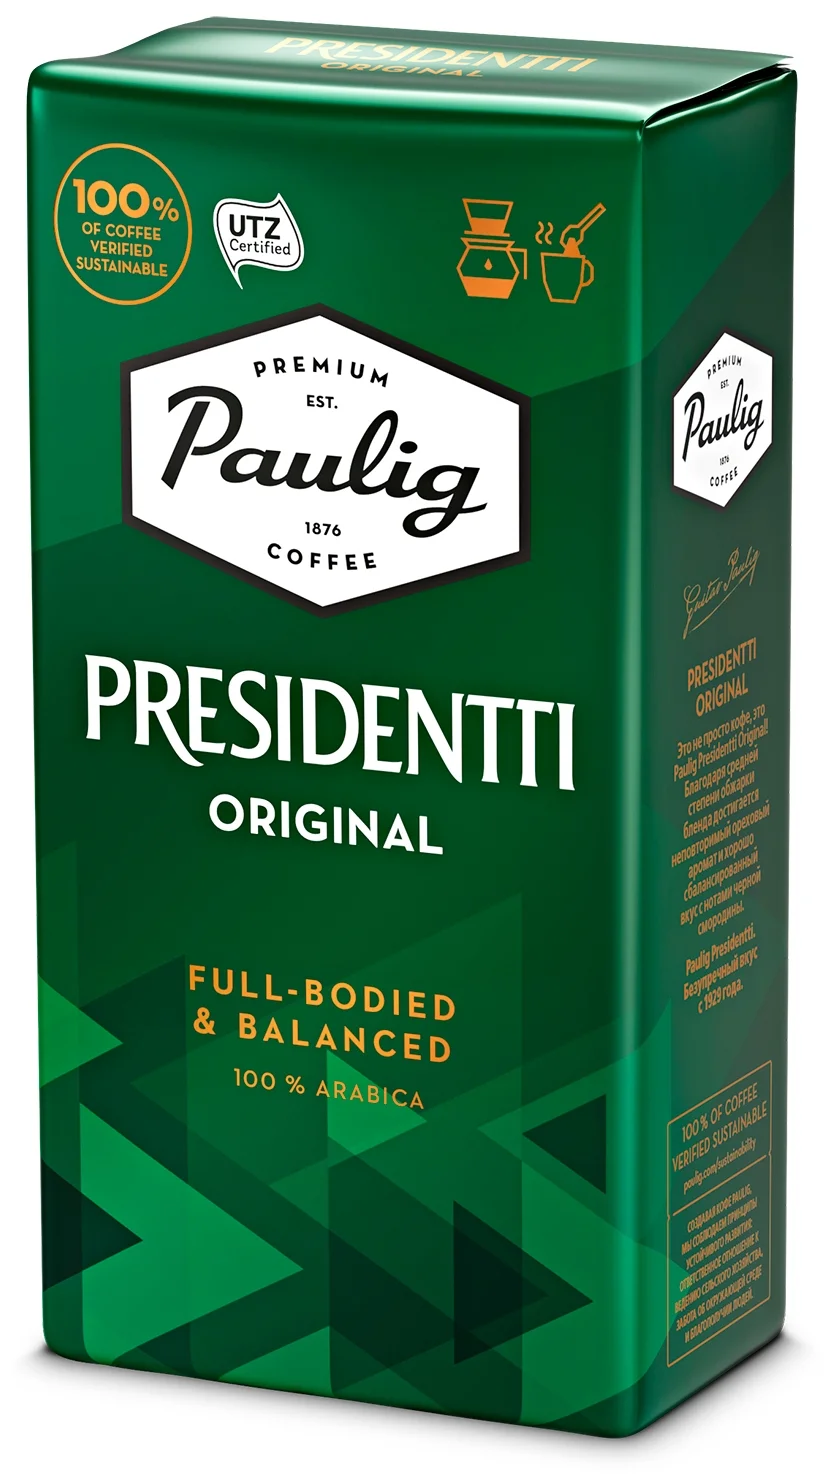 Paulig Presidentti Original - вид зерен: арабика